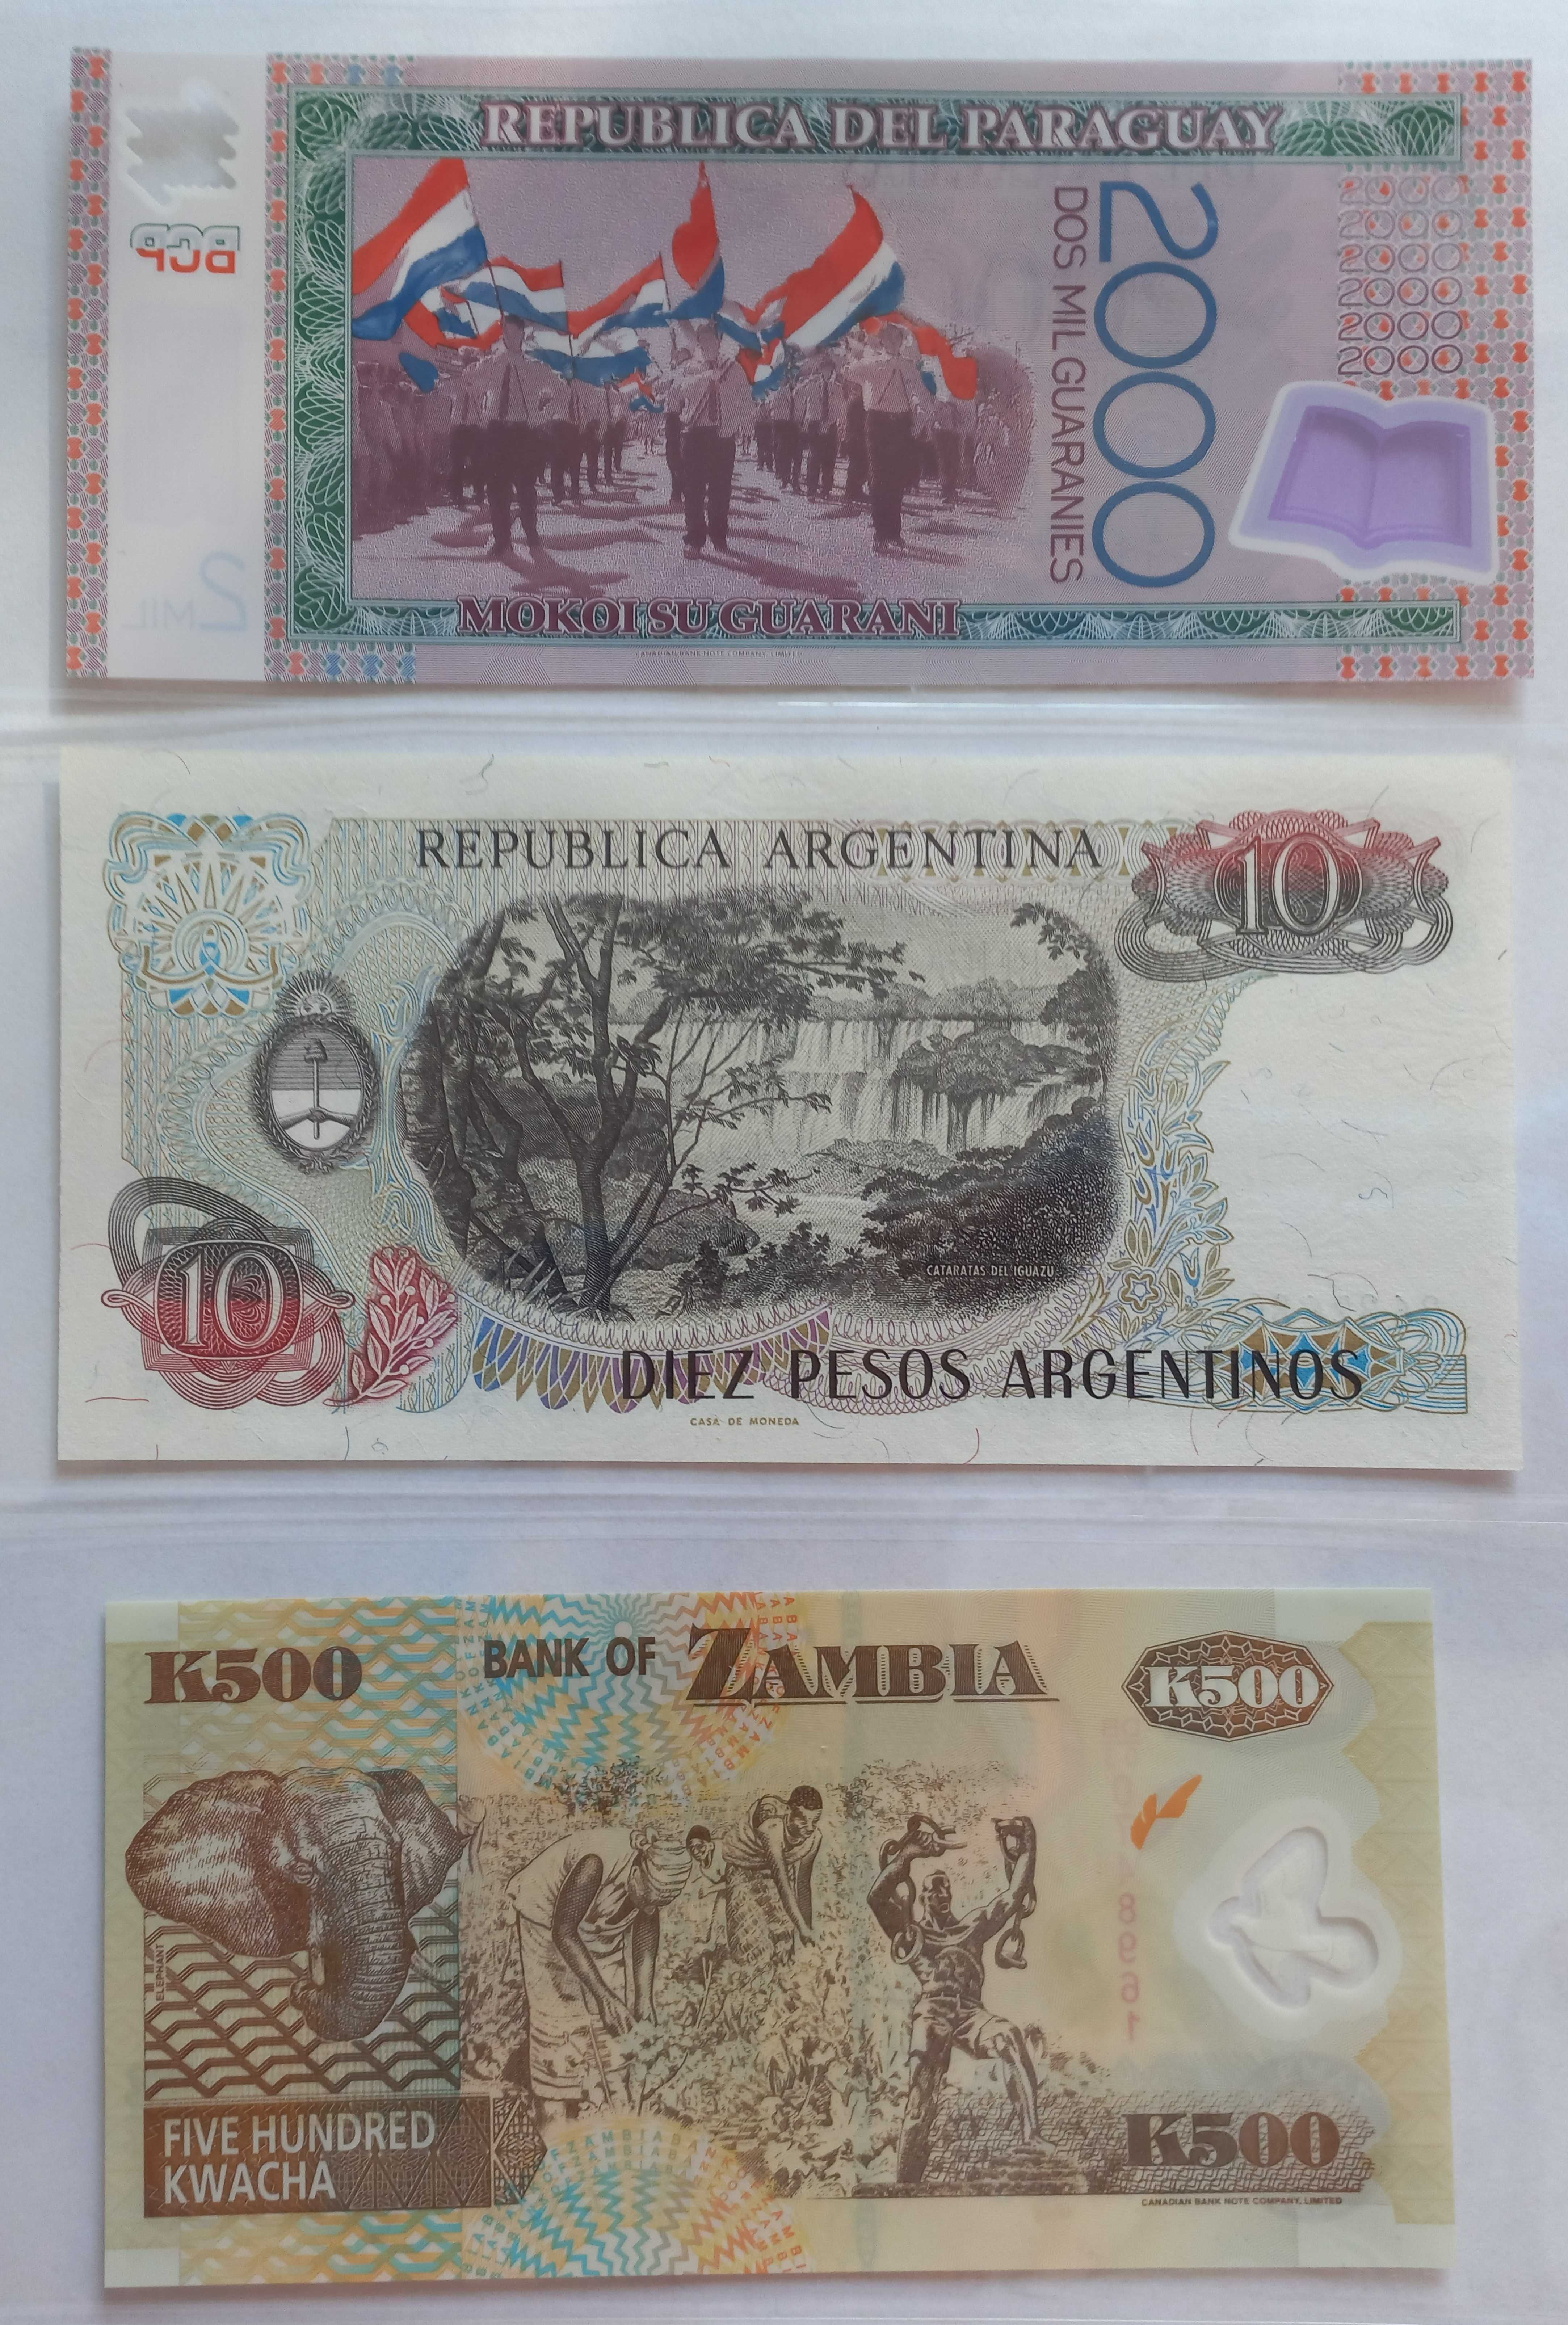 Paragwaj, Argentyna, Zambia. UNC  2000 Guaranies, 10 Pesos, 500 Kwacha